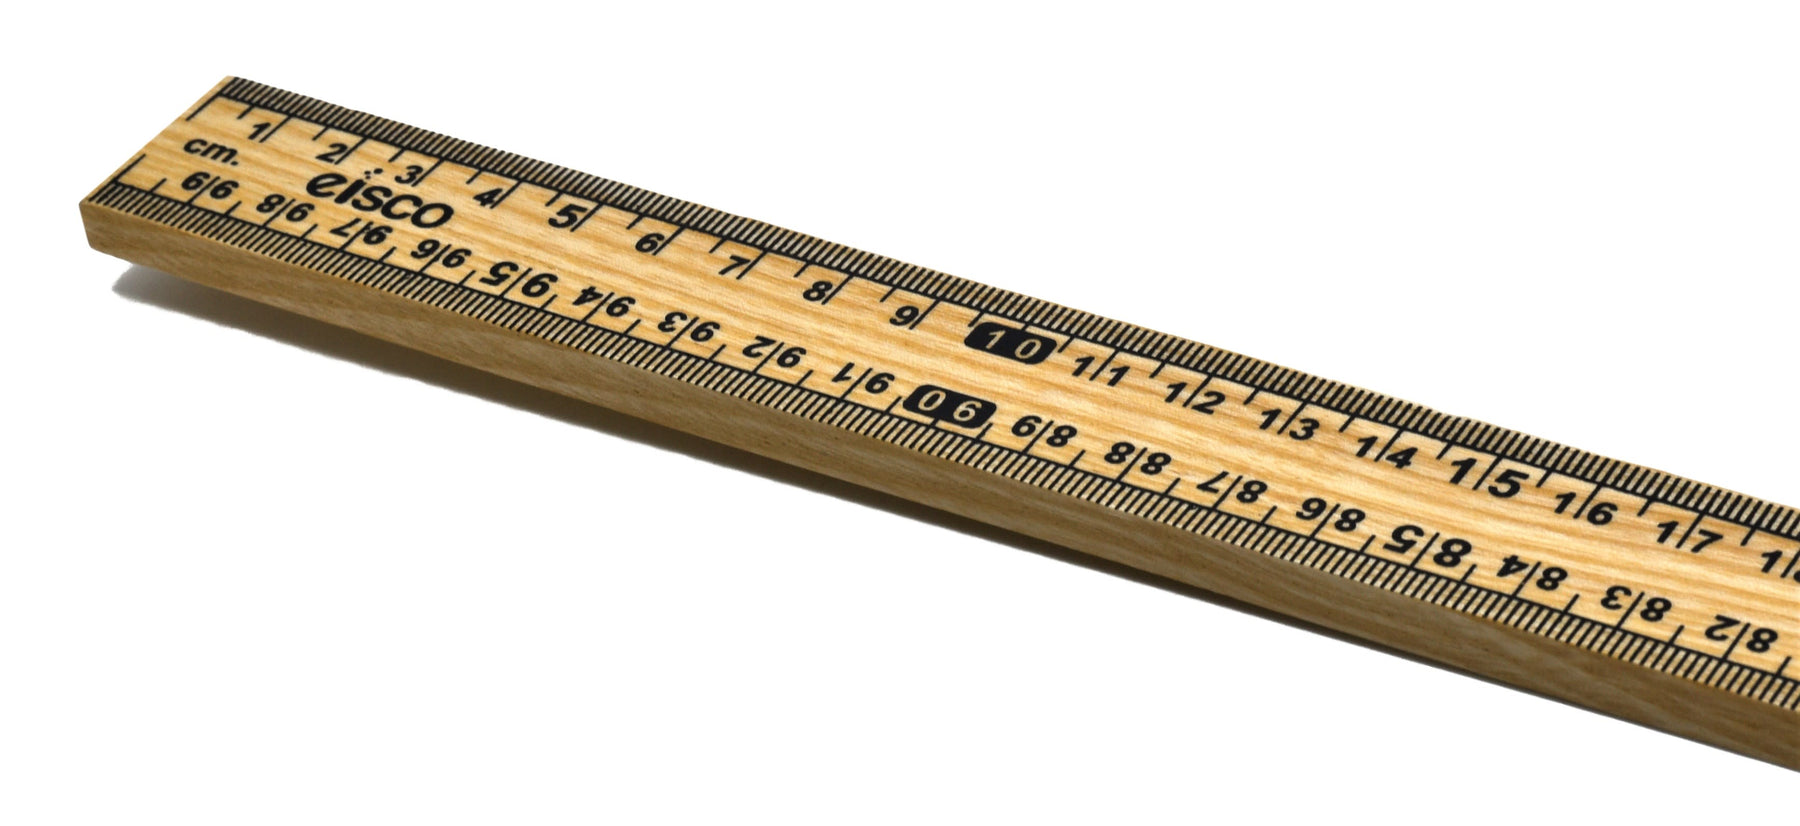 Meter Stick, One Meter - Hardwood - Graduated Edges - Horizontal Reading - Centimeters and Millimeters